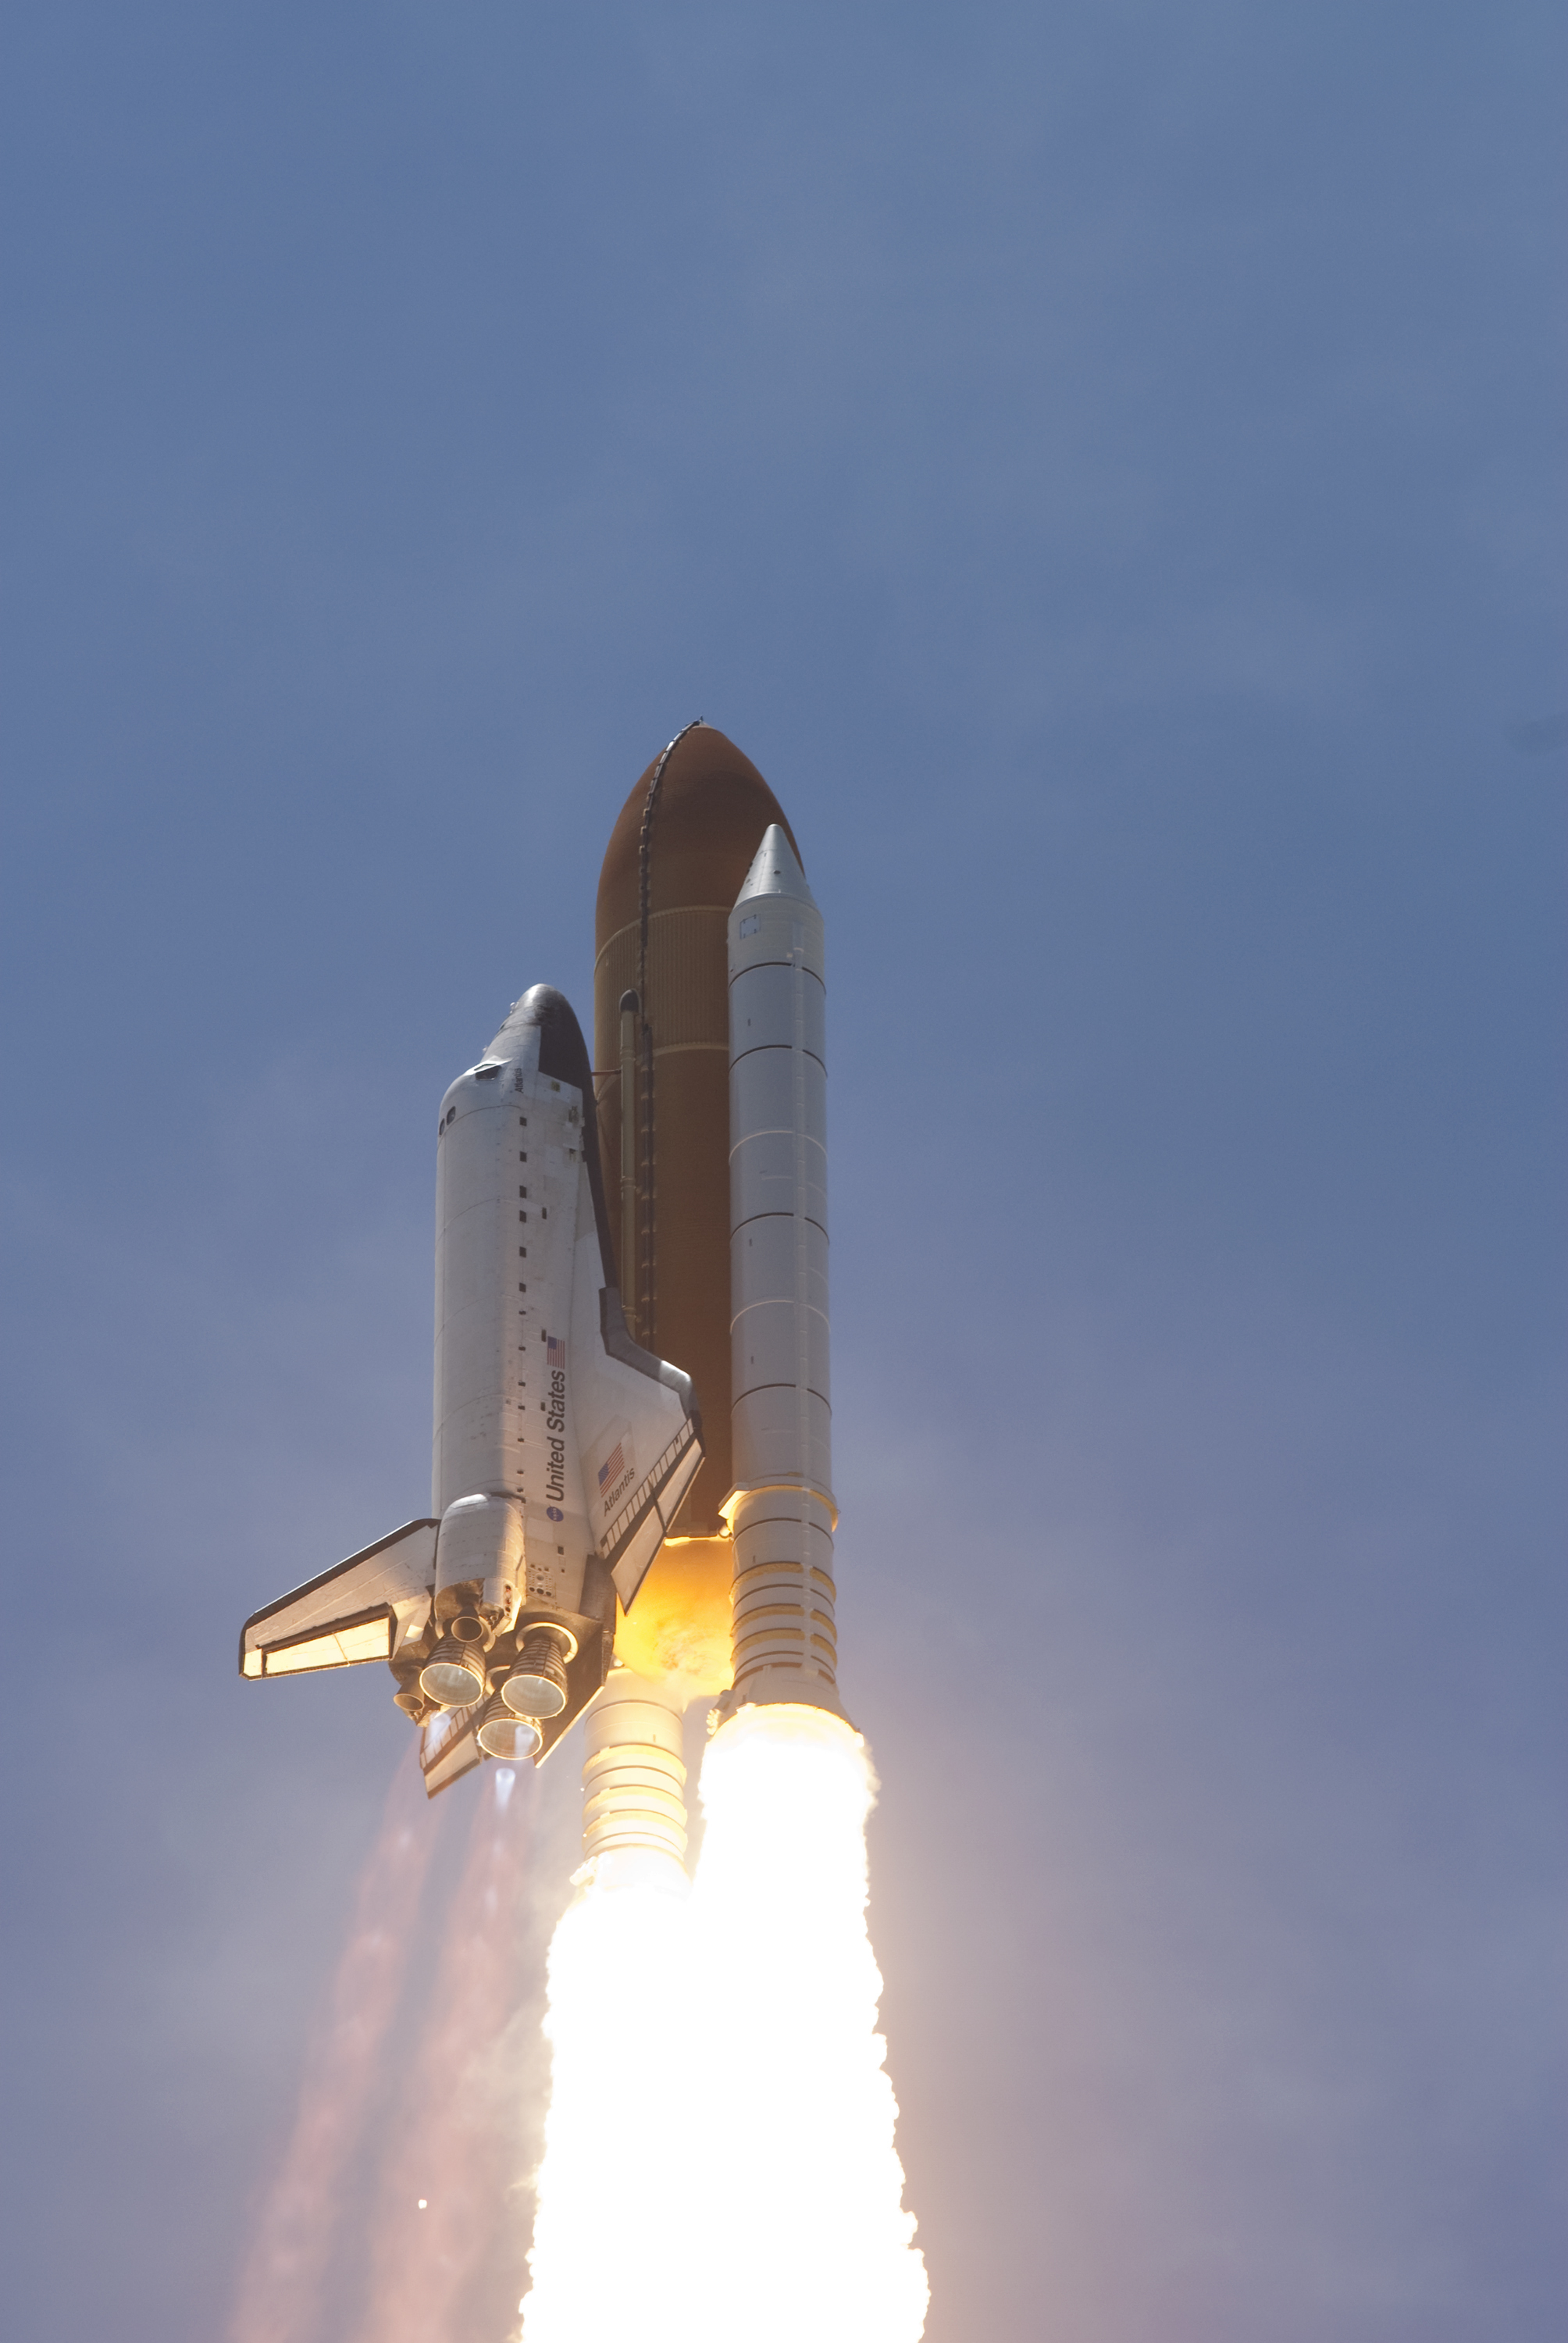 NASA - Demanding Design Boosts Shuttle Engine